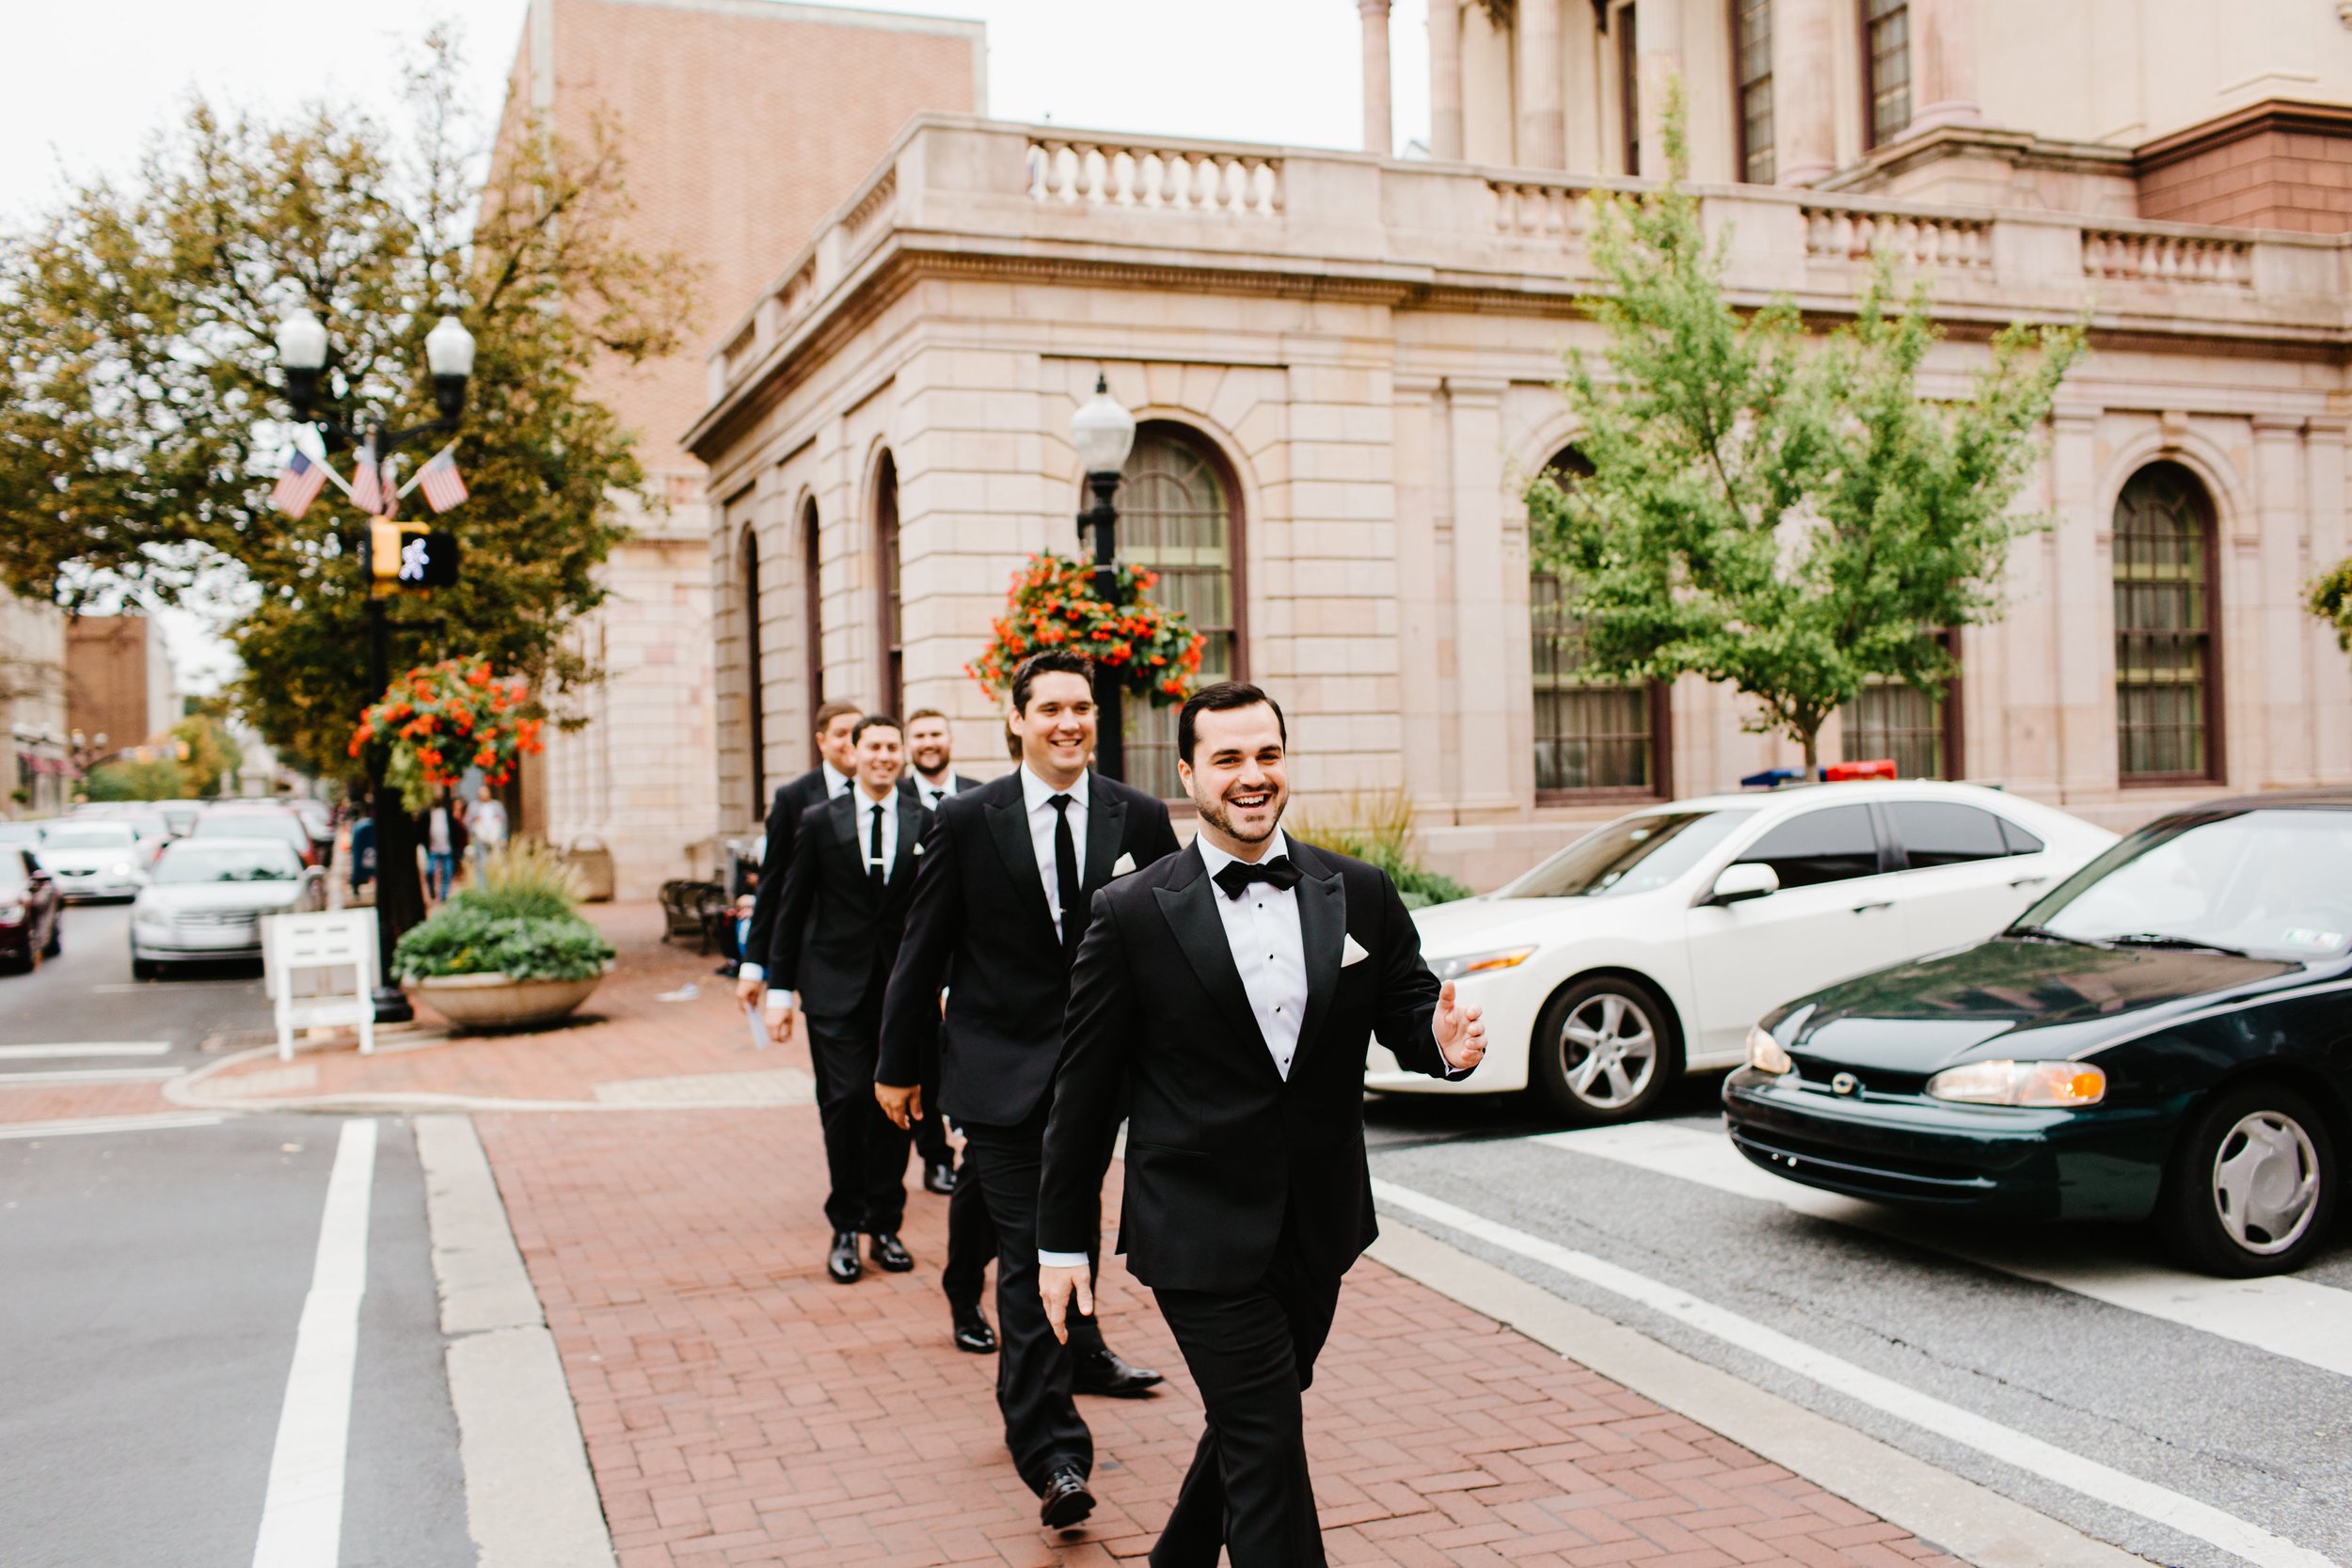 Groom and groomsmen walking across street city center